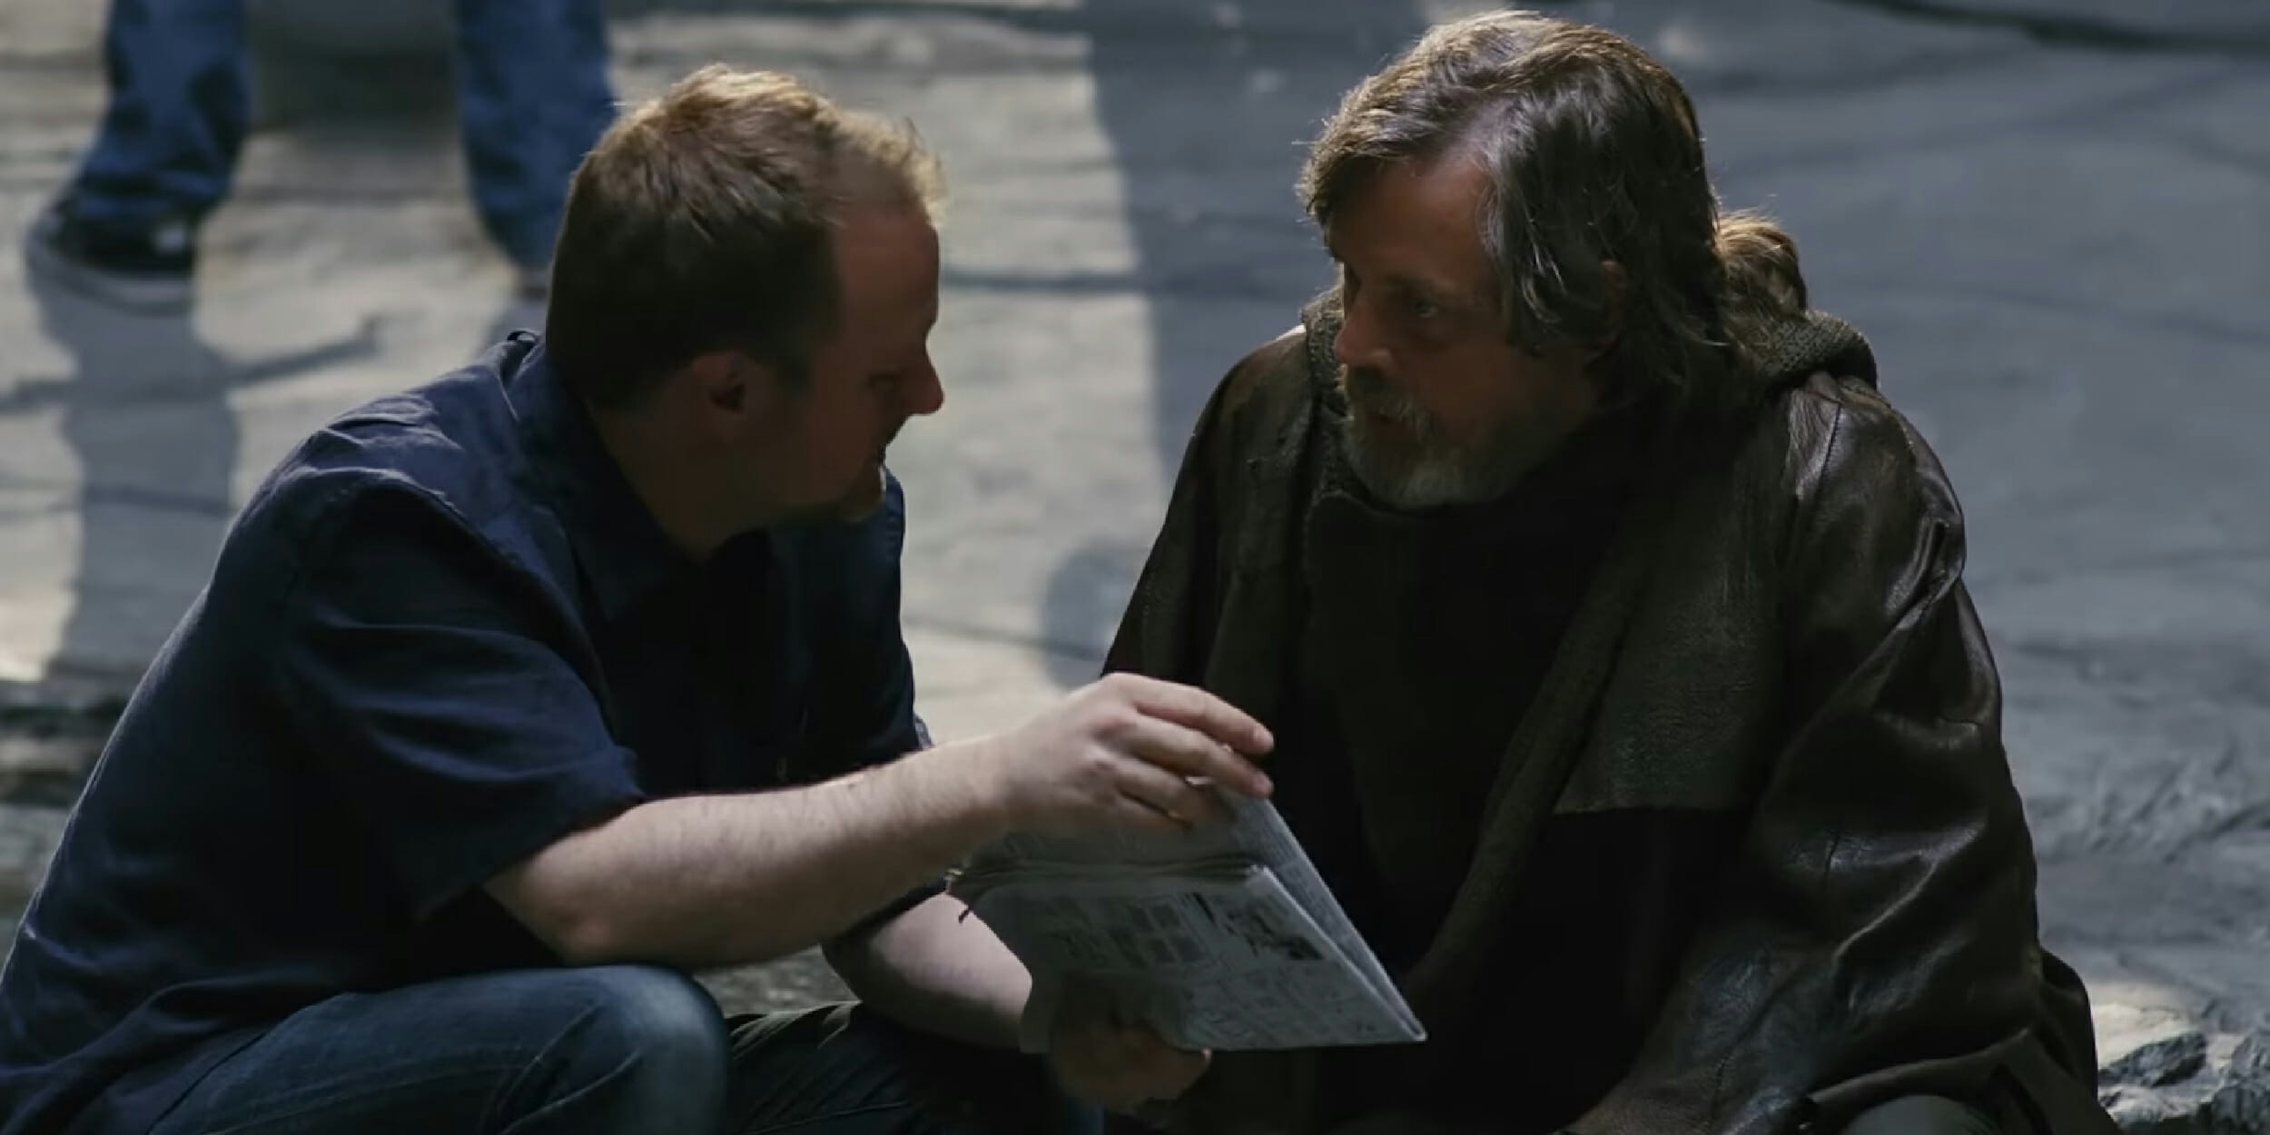 Mark Hamill regrets criticizing 'Star Wars: The Last Jedi' director's  vision for Luke Skywalker